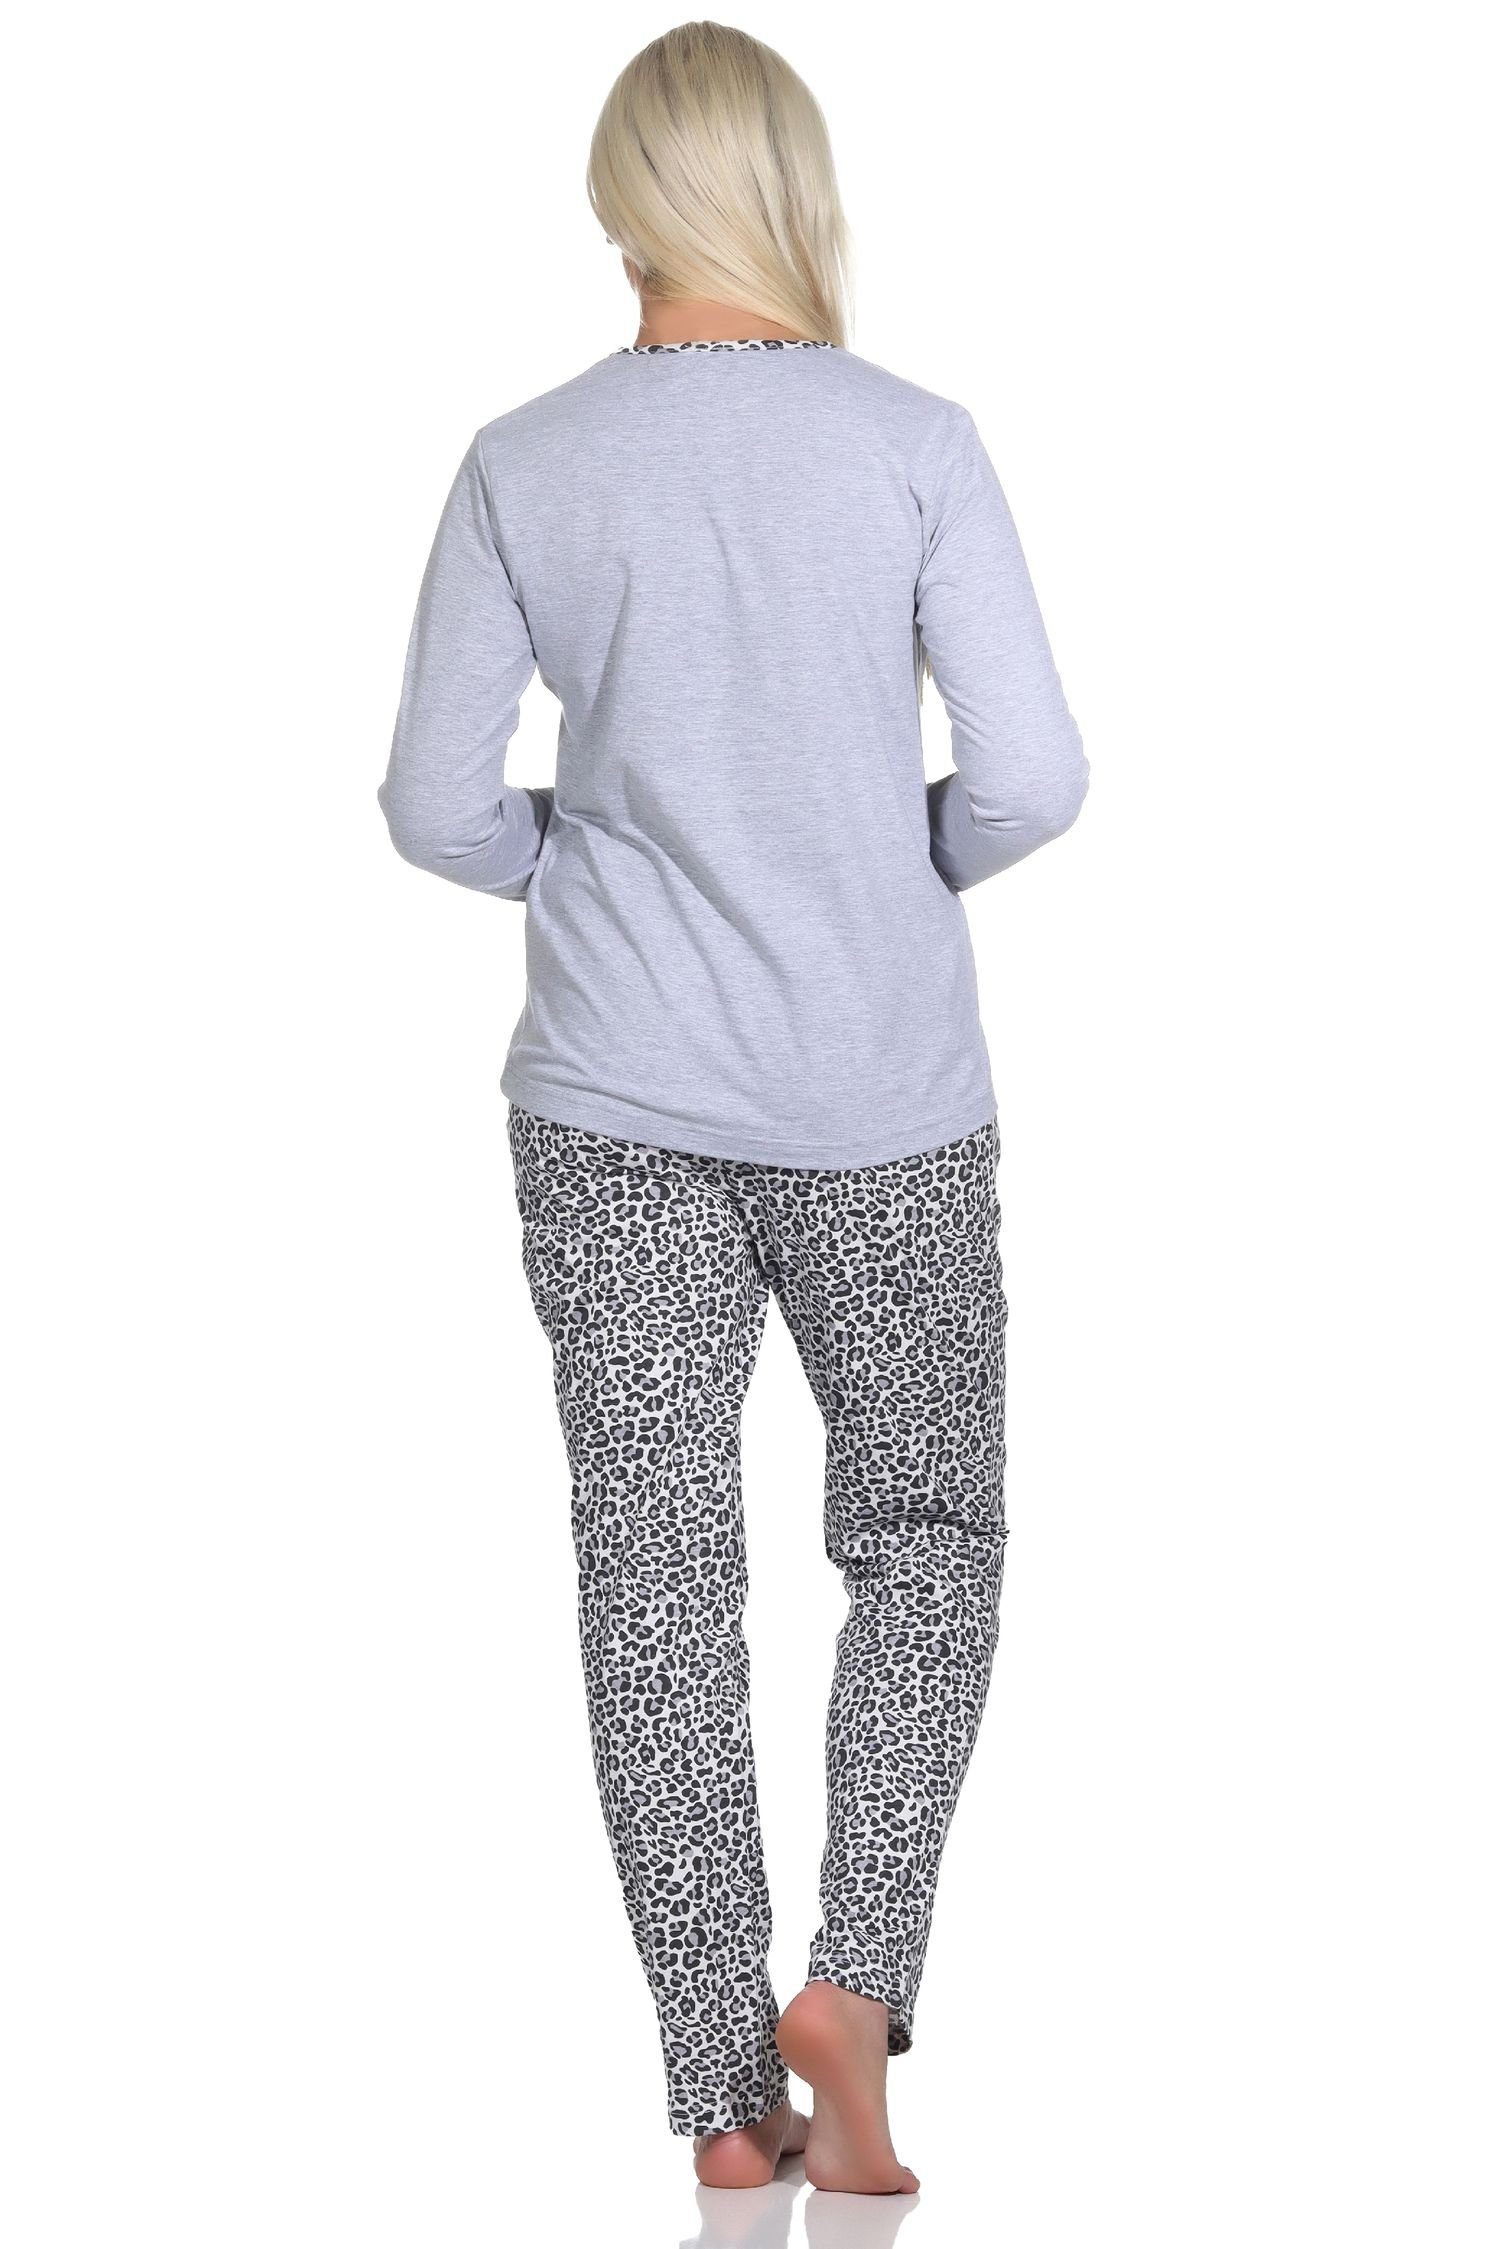 Tiermotiv, Schlafanzug Hose Langarm mit Pyjama Normann grau-mel. Damen Animal-Print-Look im